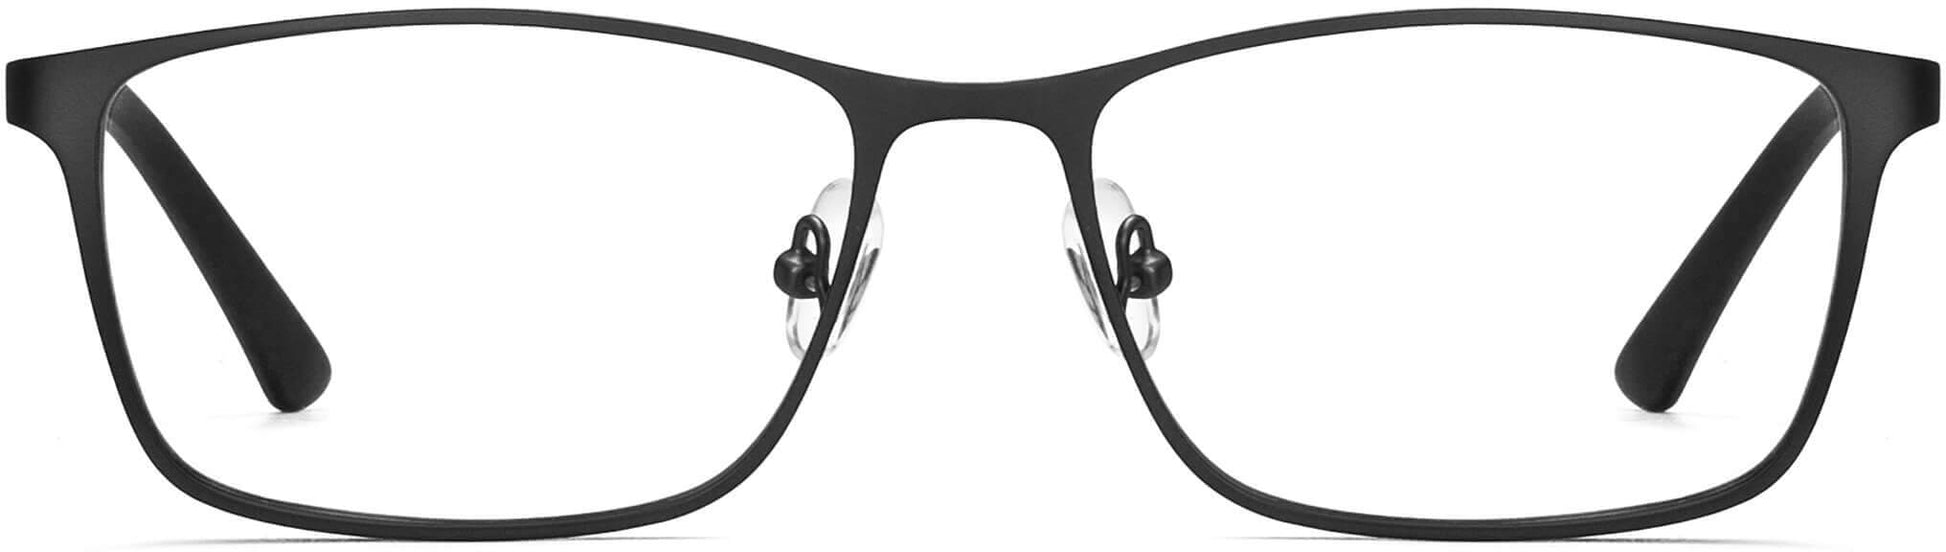 Macon Black Metal Eyeglasses from ANRRI